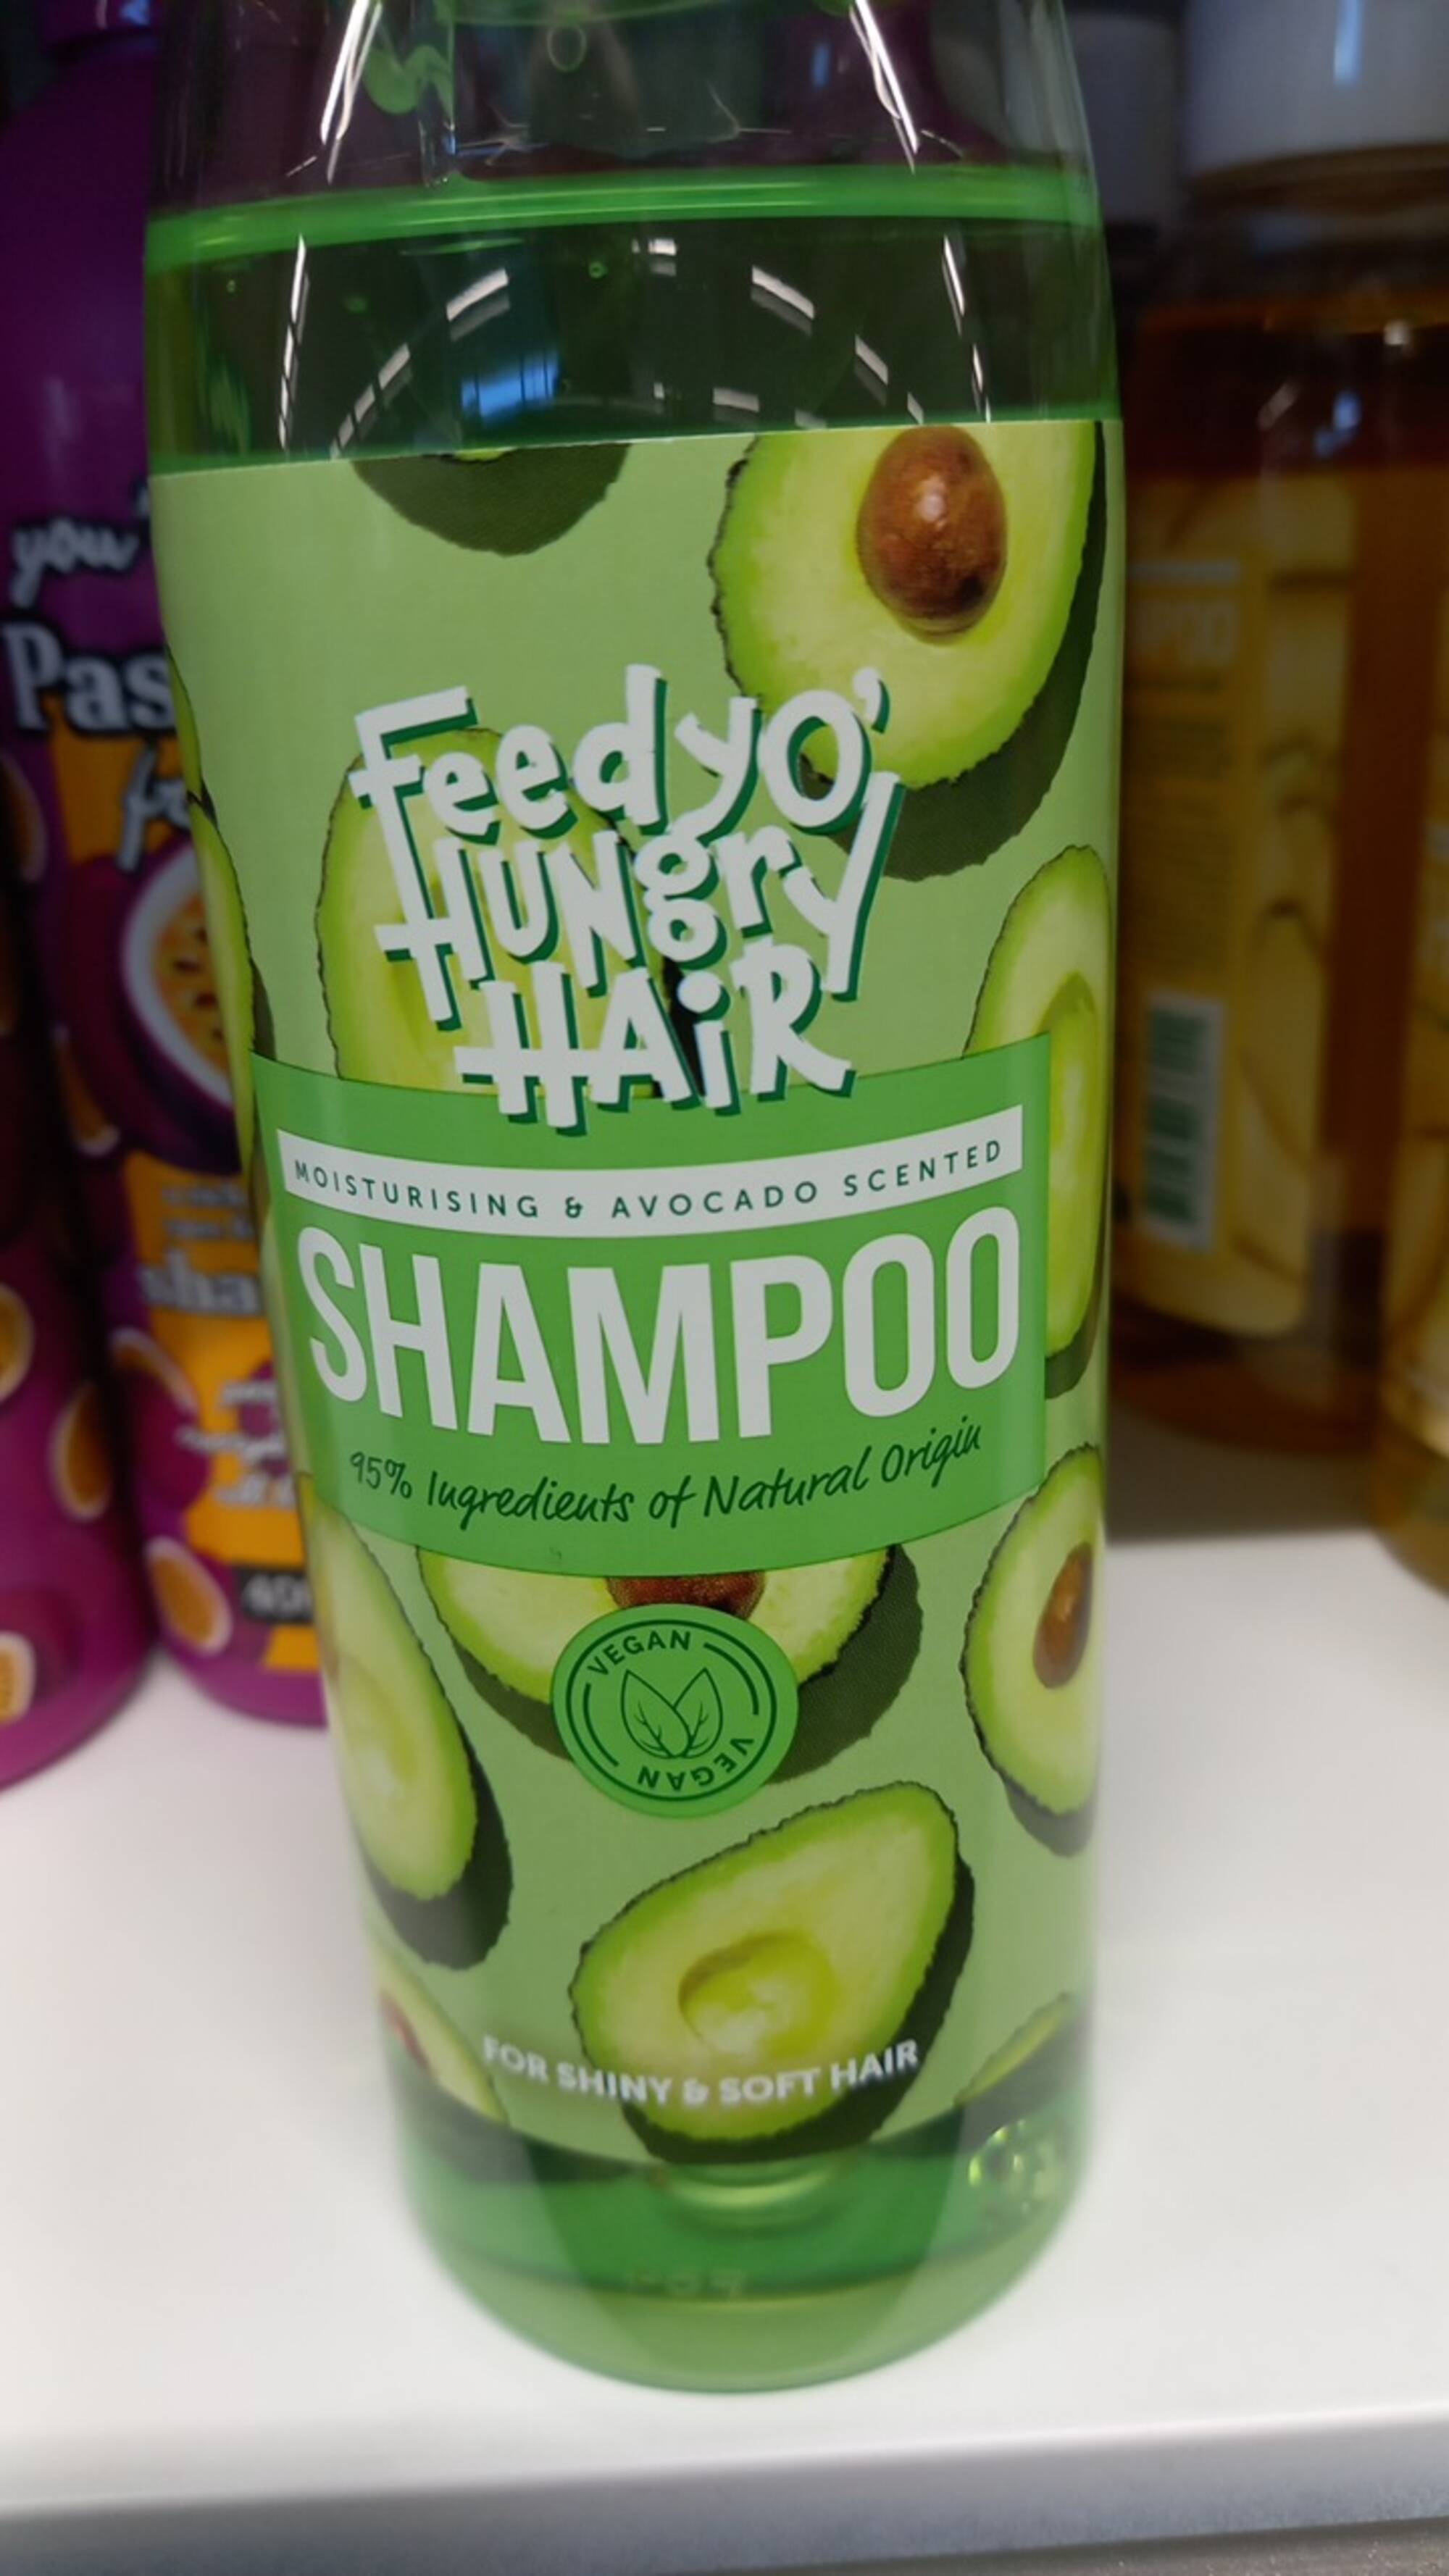 FEEDYO HUNGRY HAIR - Moisturing & avocado scented - Shampoo